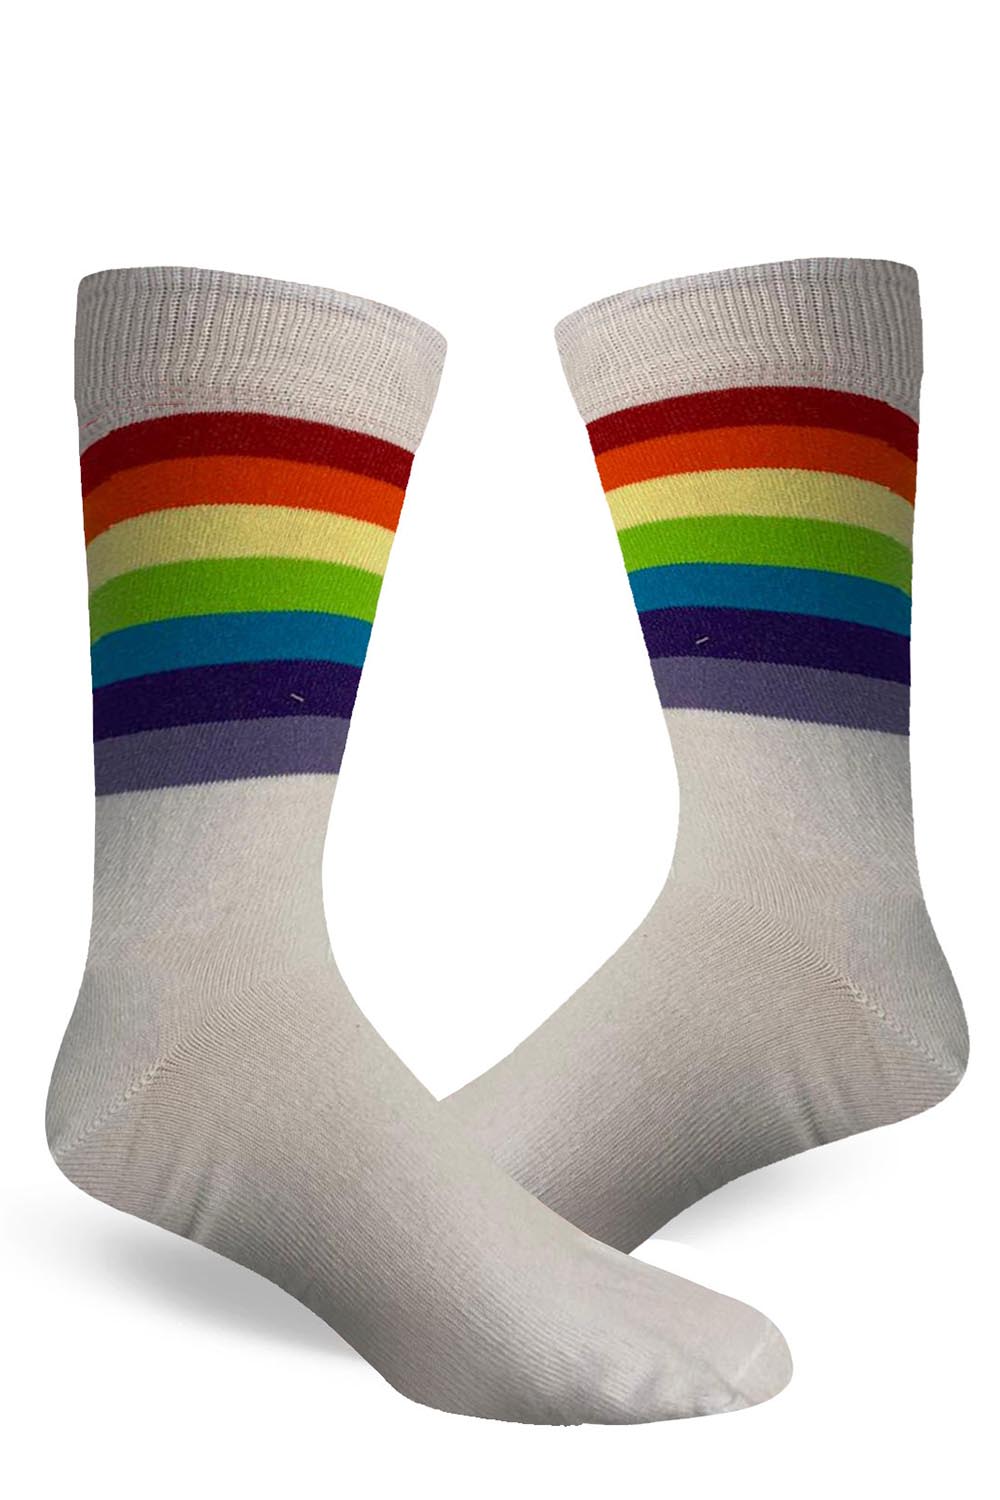 Wickedfun Men's 3 Stripe Referee White With Rainbow Ankle High Socks(12 Pairs)